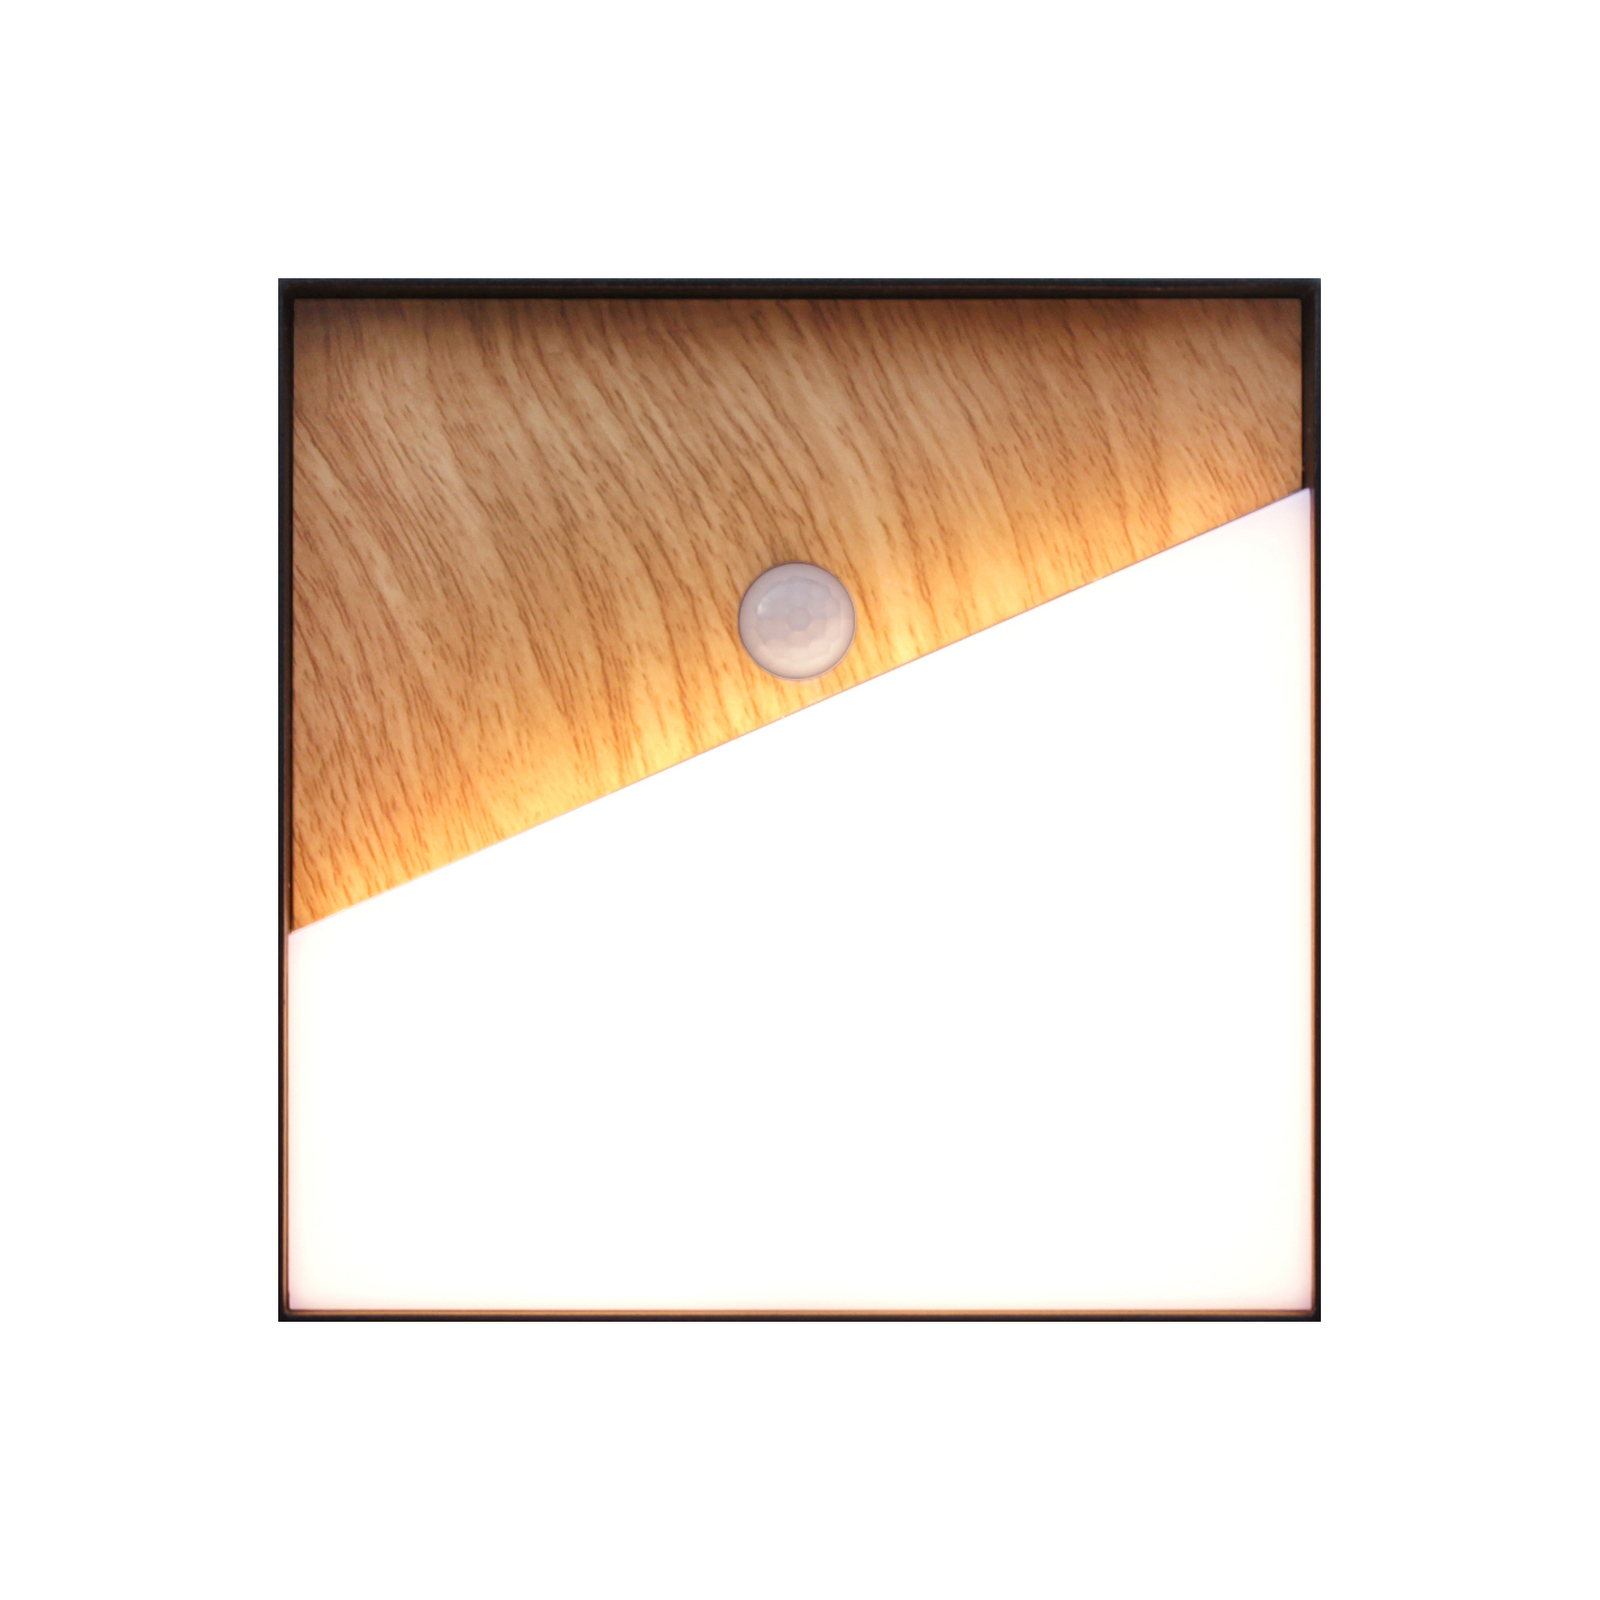 LED wall light Meg, wood-coloured, 15 x 15 cm, sensor